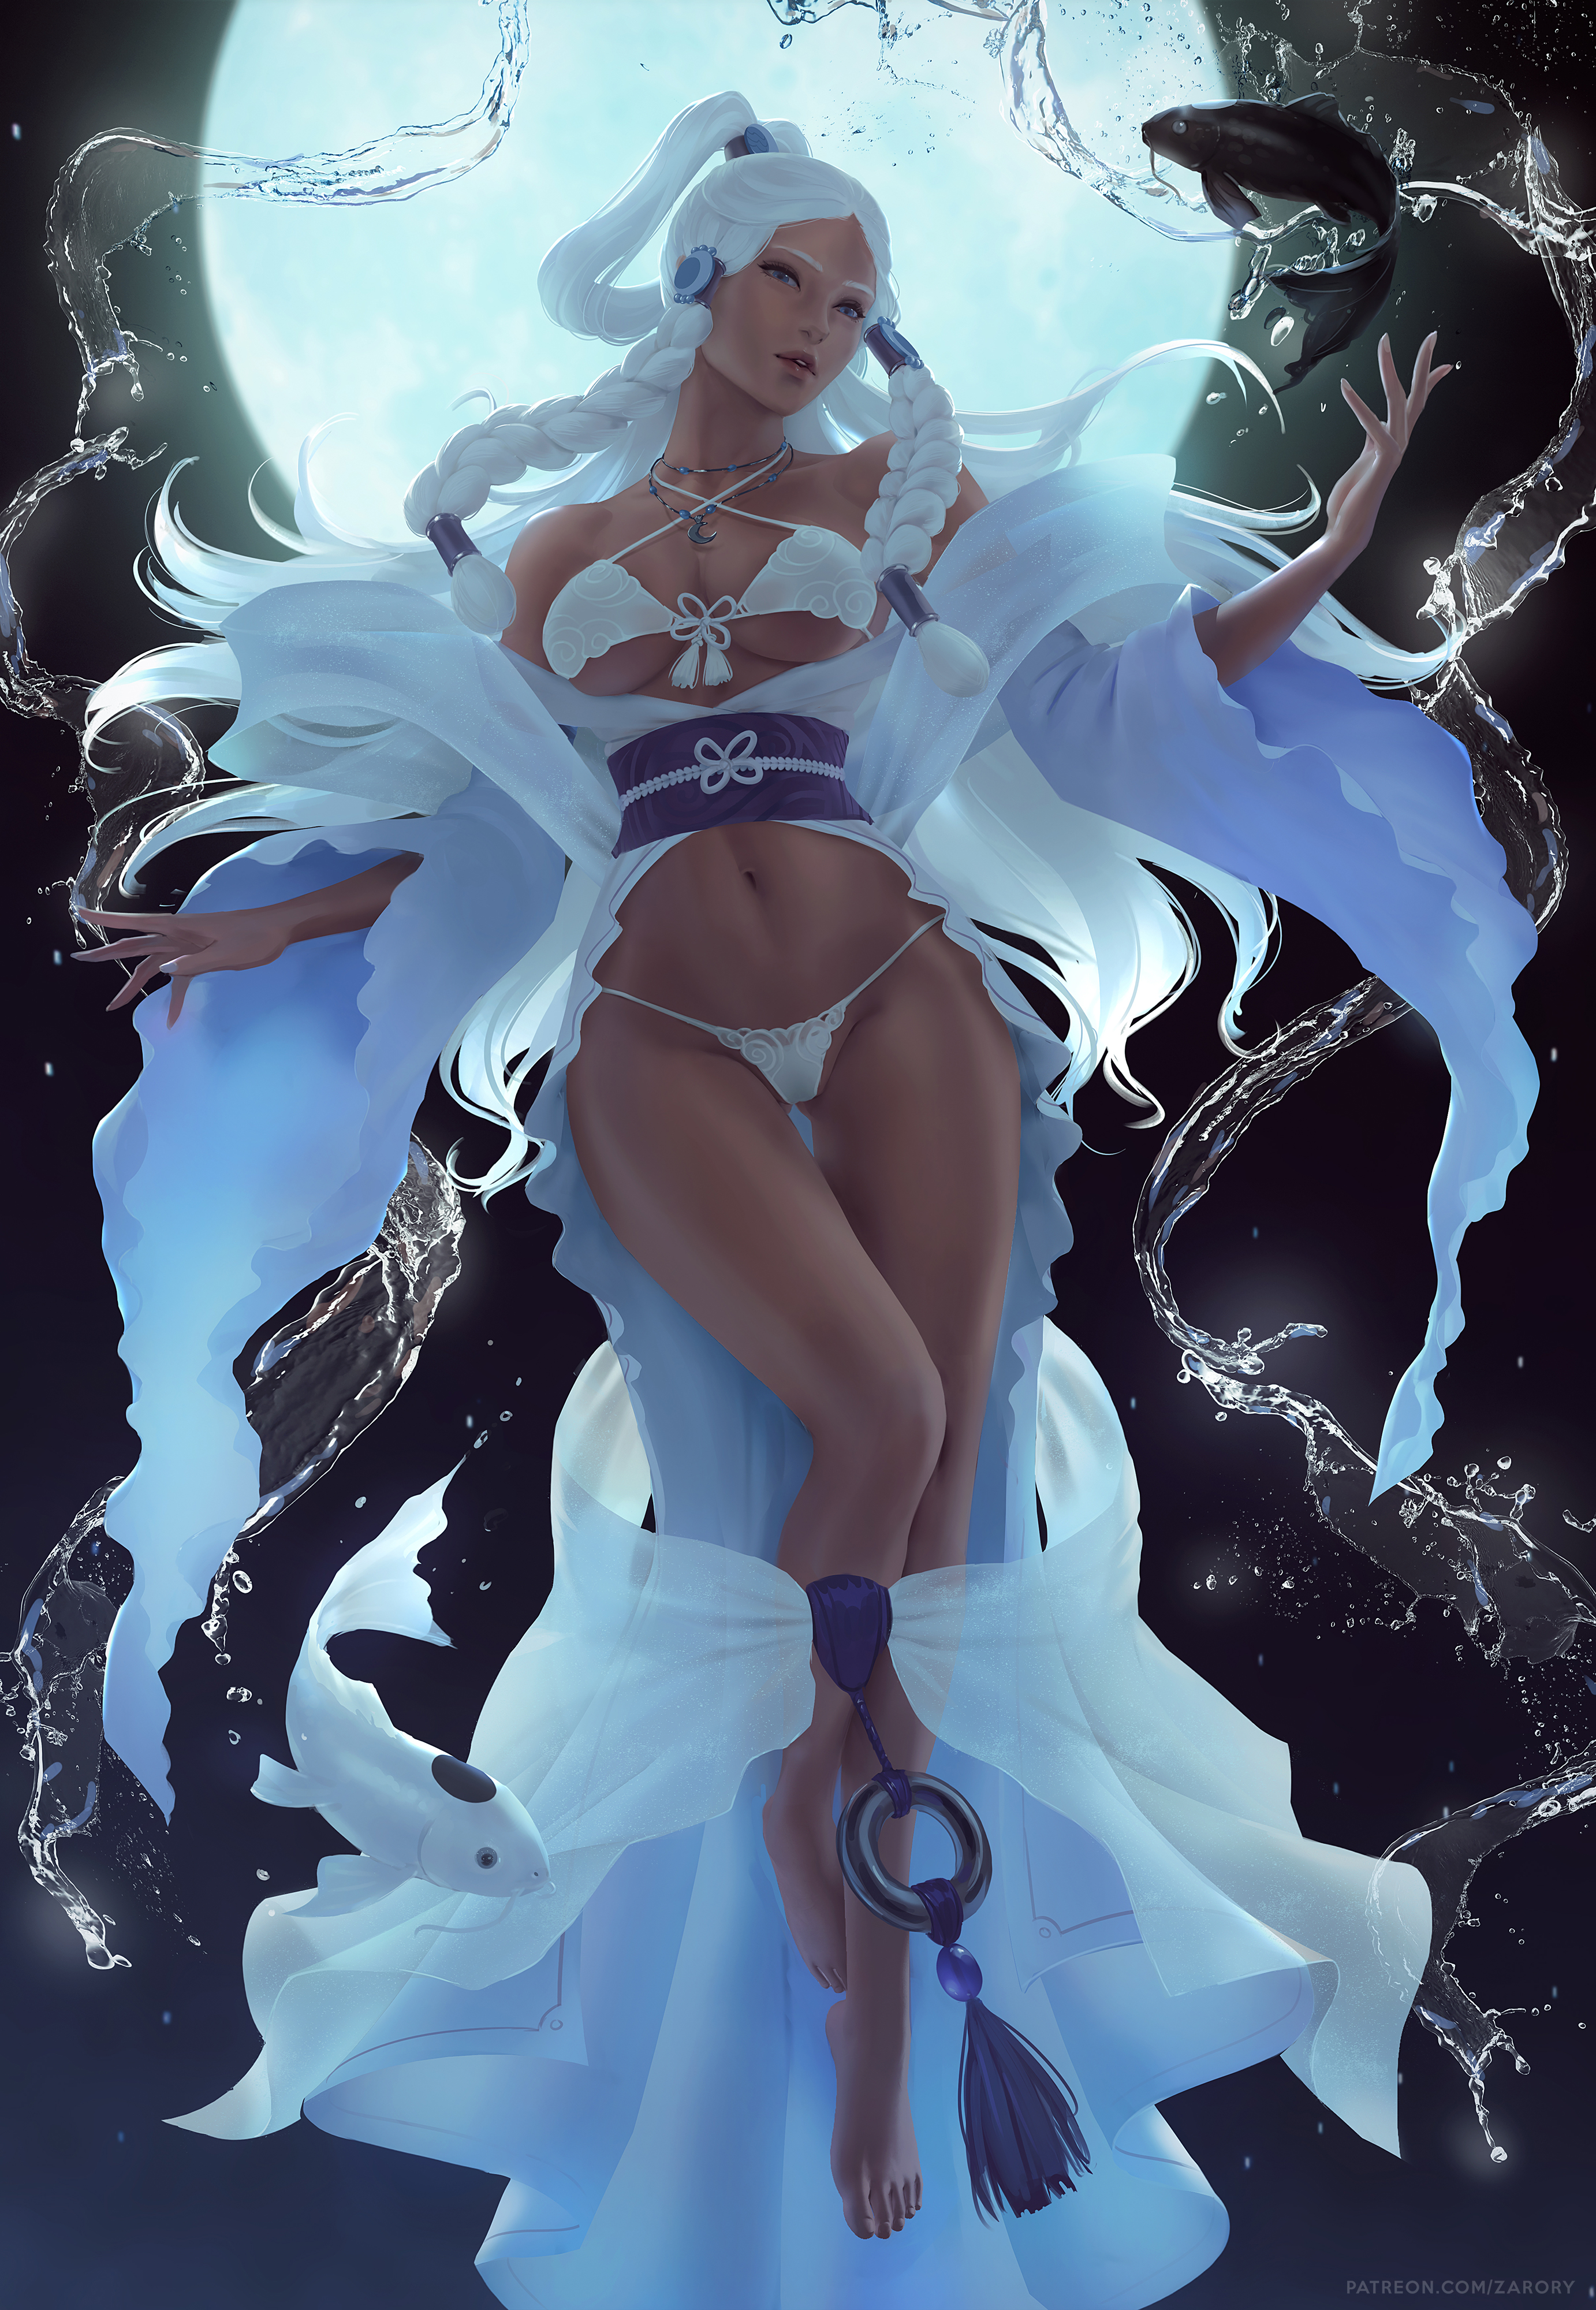 General 2764x4000 Princess Yue Avatar: The Last Airbender fictional character animated series moonlight braids white hair underwear panties bra the gap artwork 2D drawing fan art Zarory